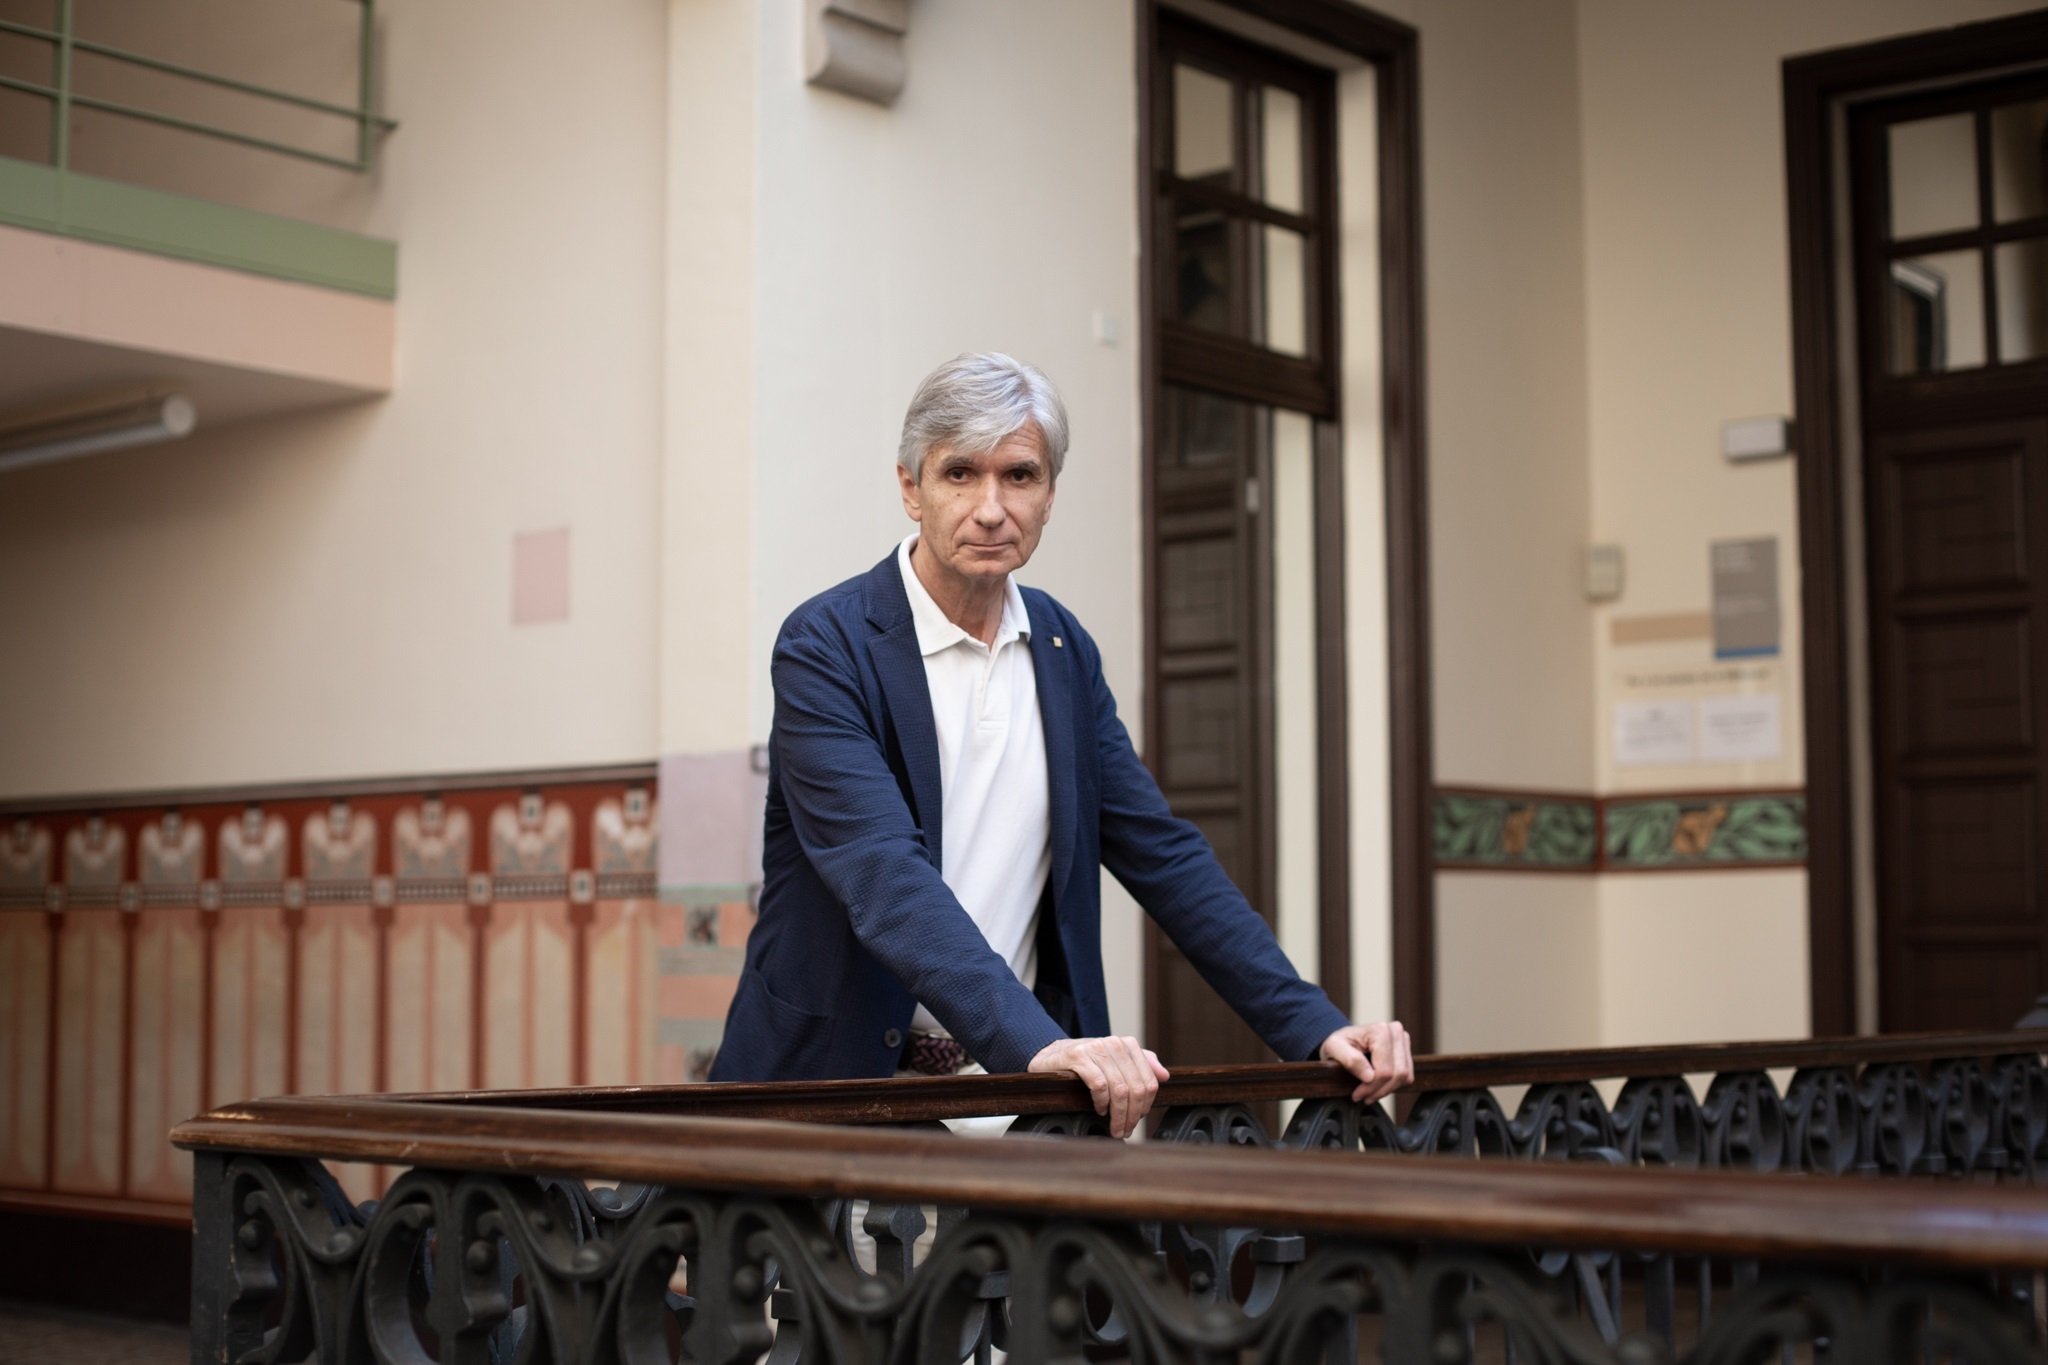 conseller de Salut, Josep maria Argimon, Foto: David Zorrakino / Europa Press